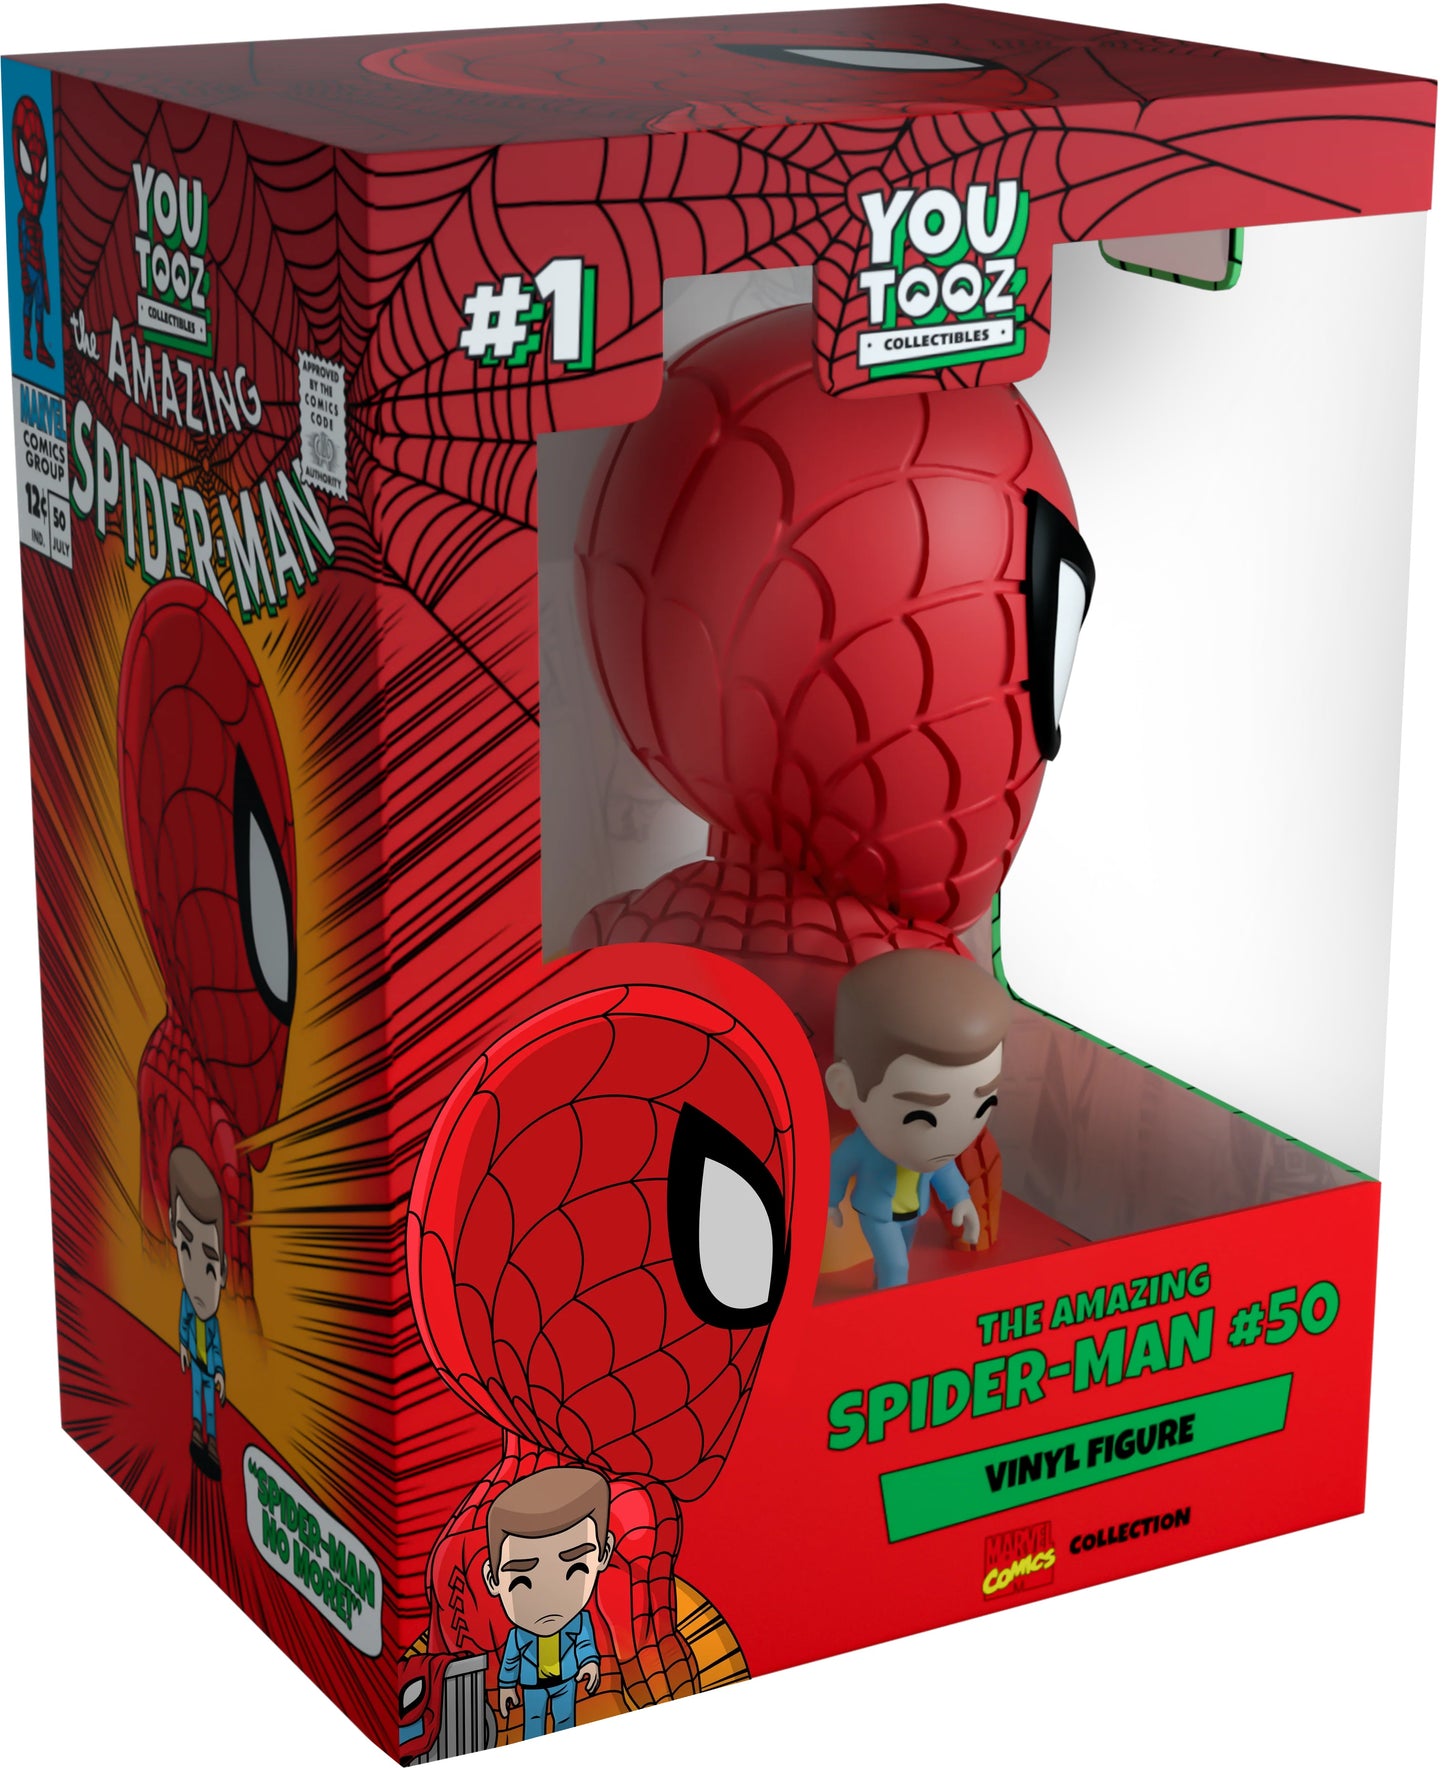 Youtooz Spider-Man The Amzing Spider-Man #50